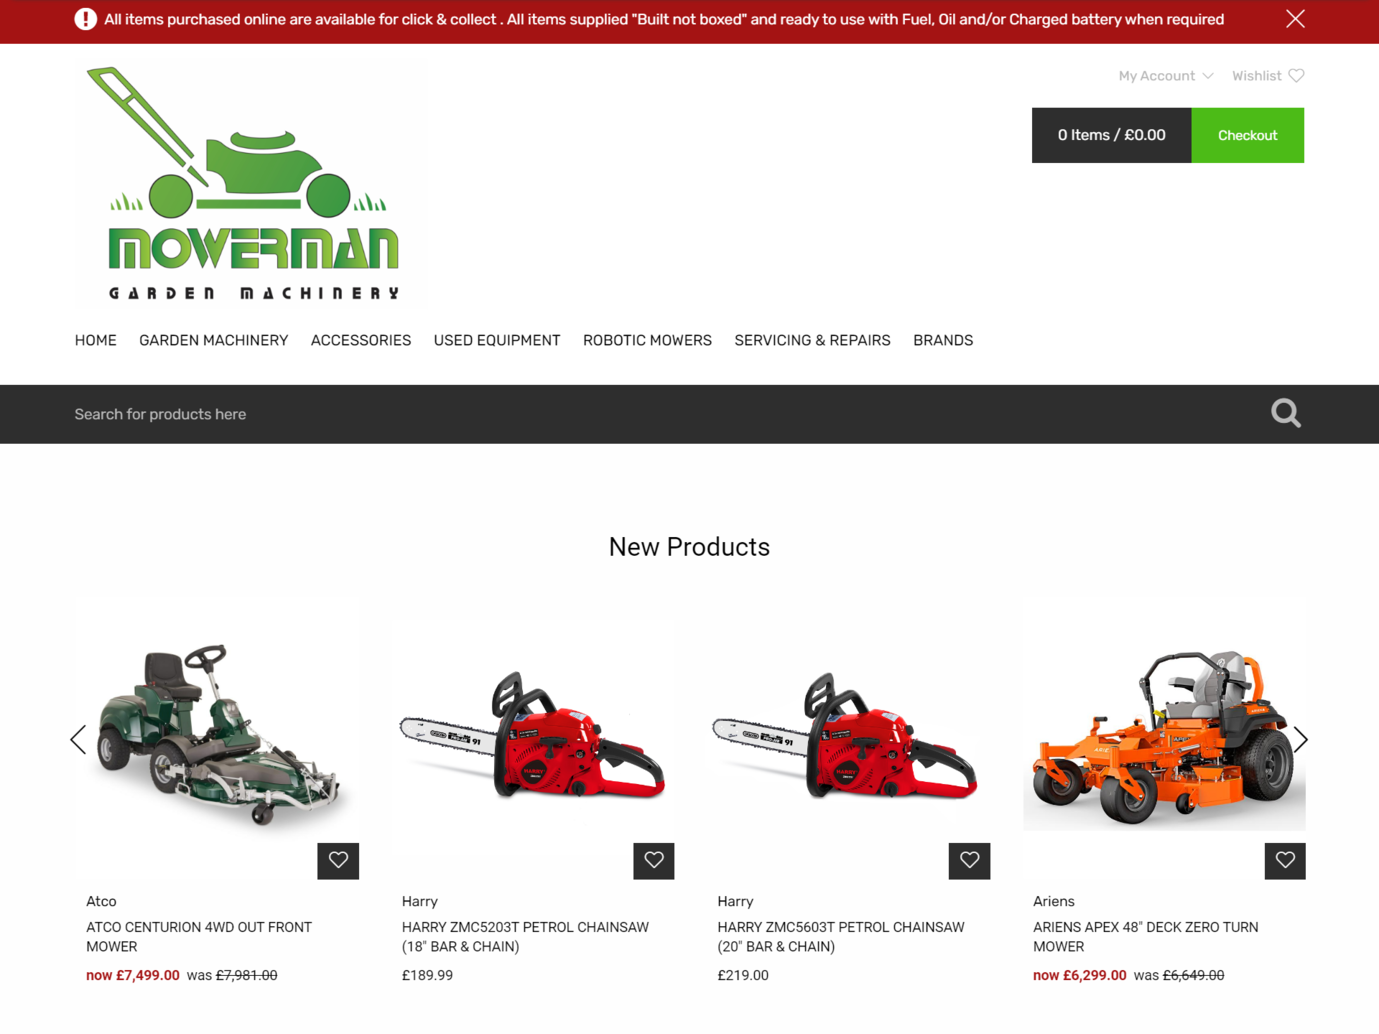 The previous website belonging to Mowerman Garden Machinery